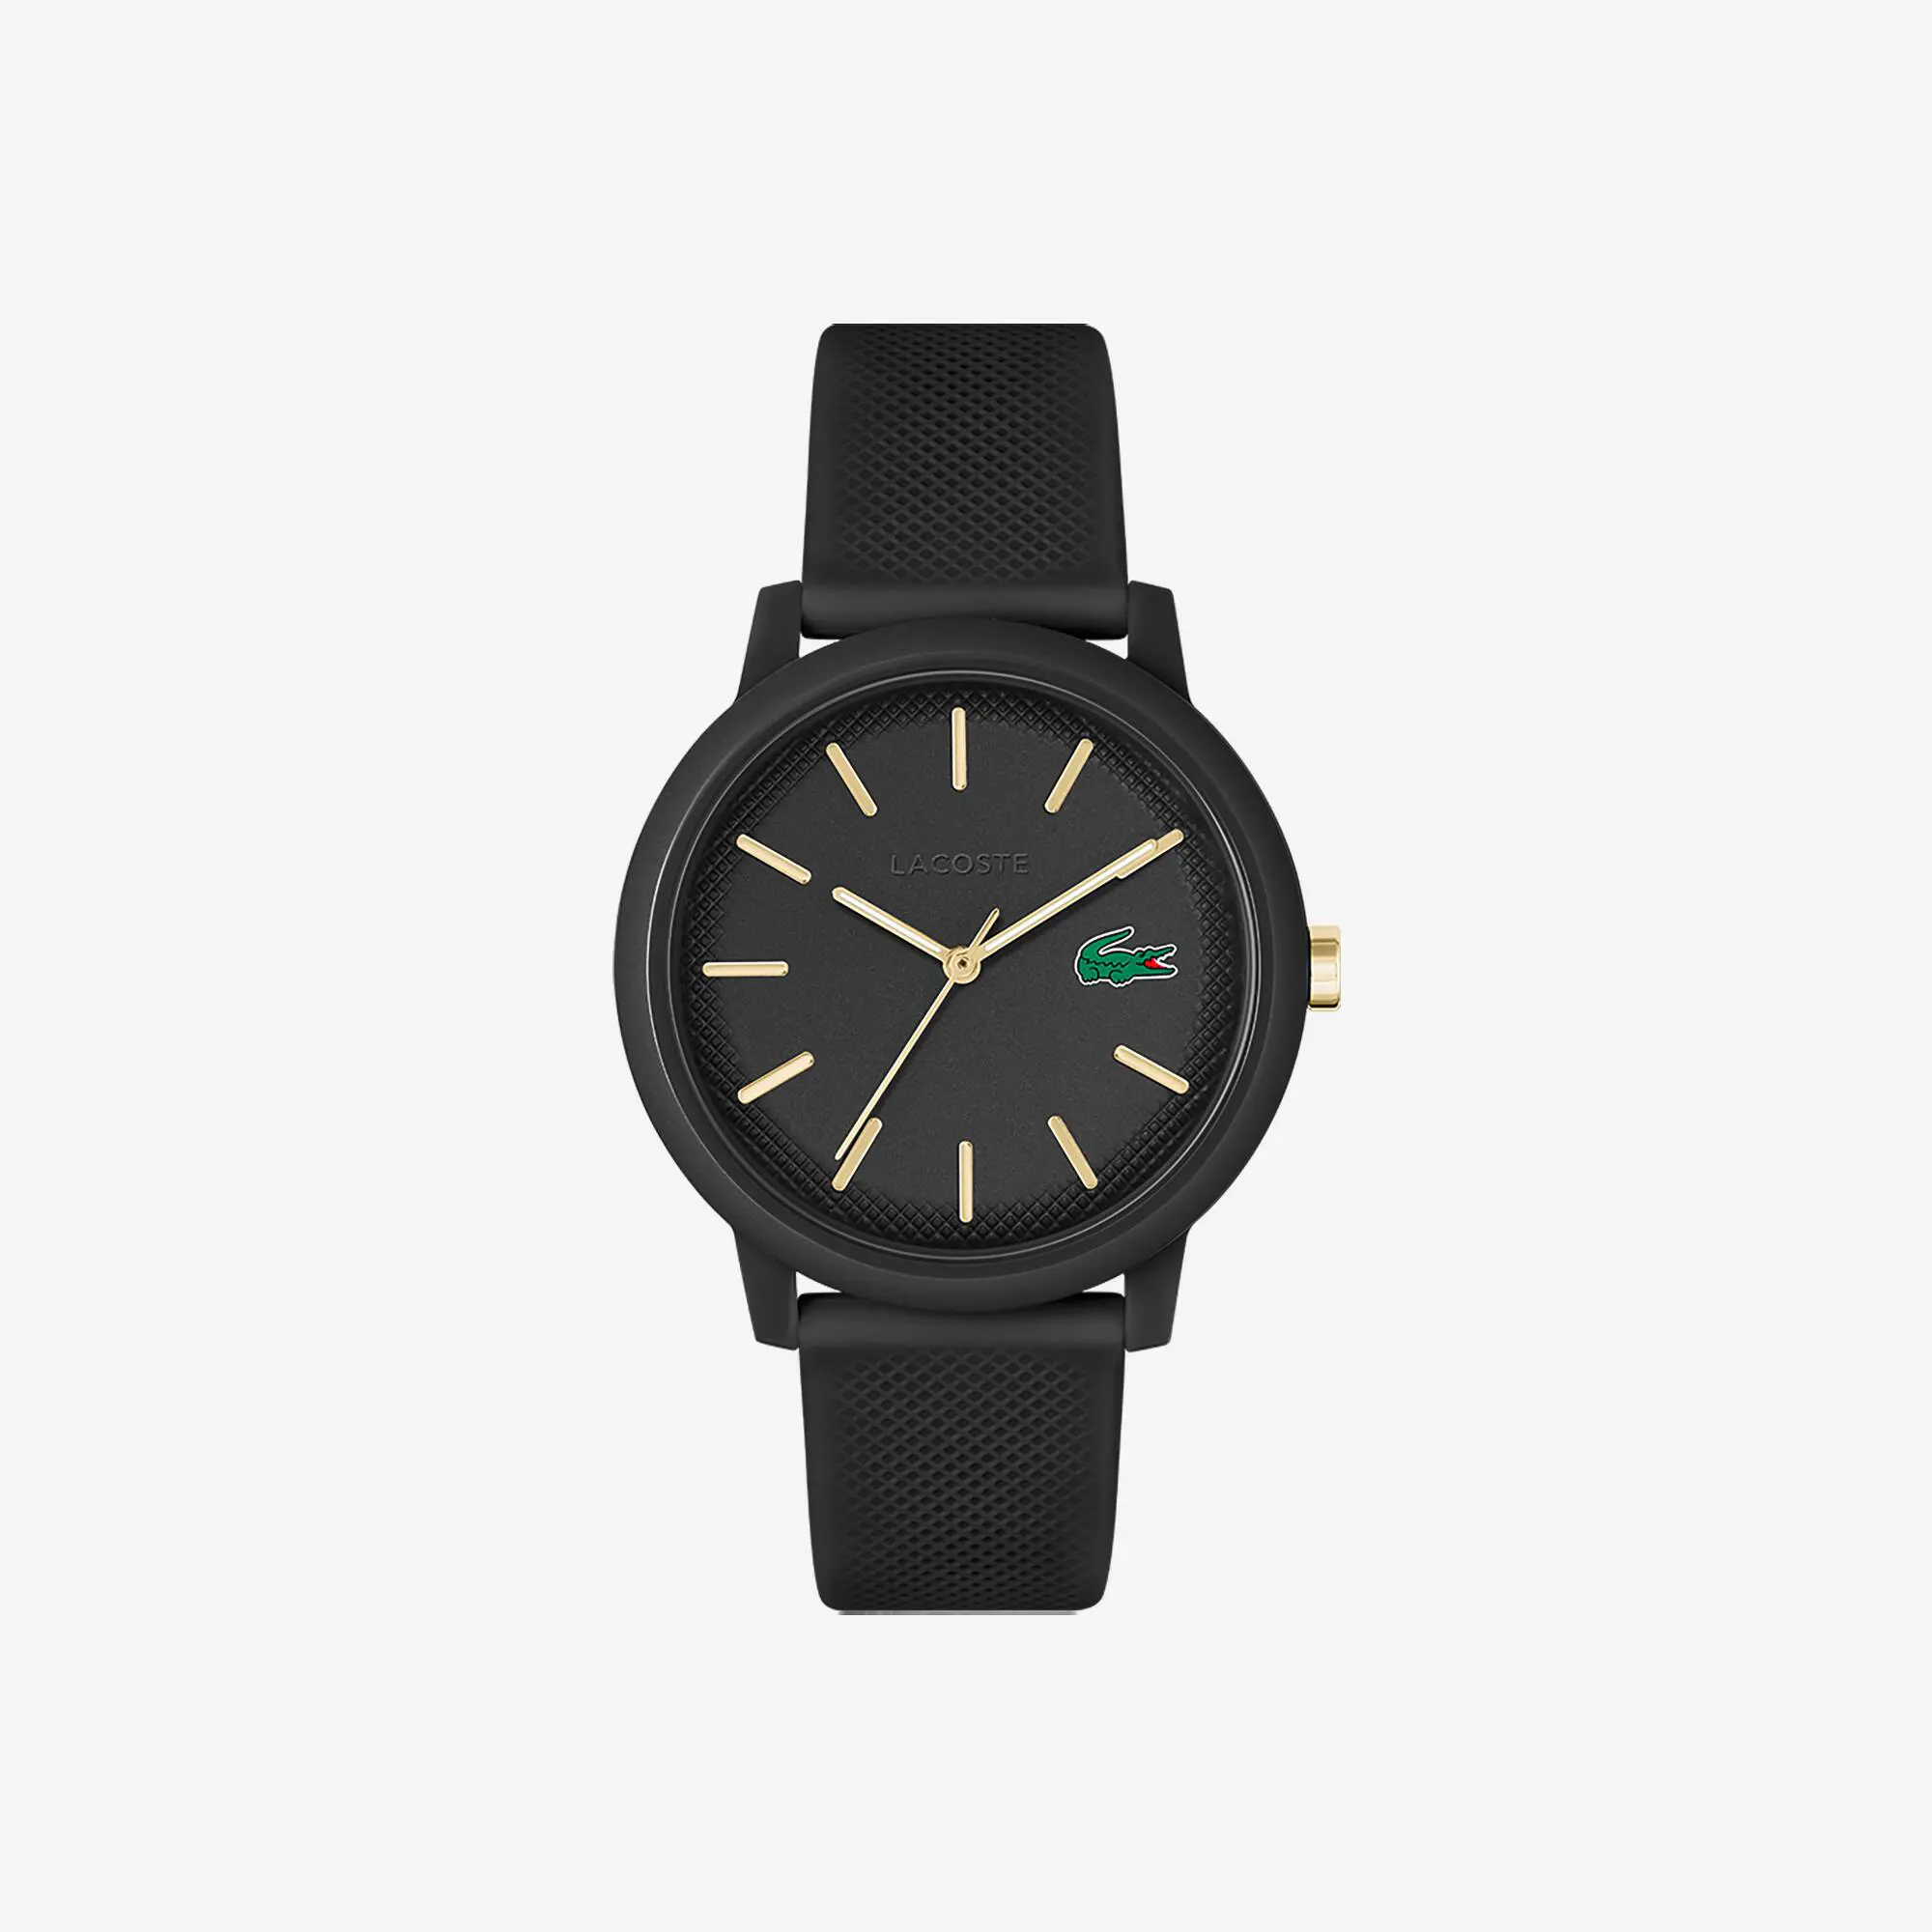 Lacoste Reloj de hombre Lacoste.12.12 en silicona negra con tres agujas. 1